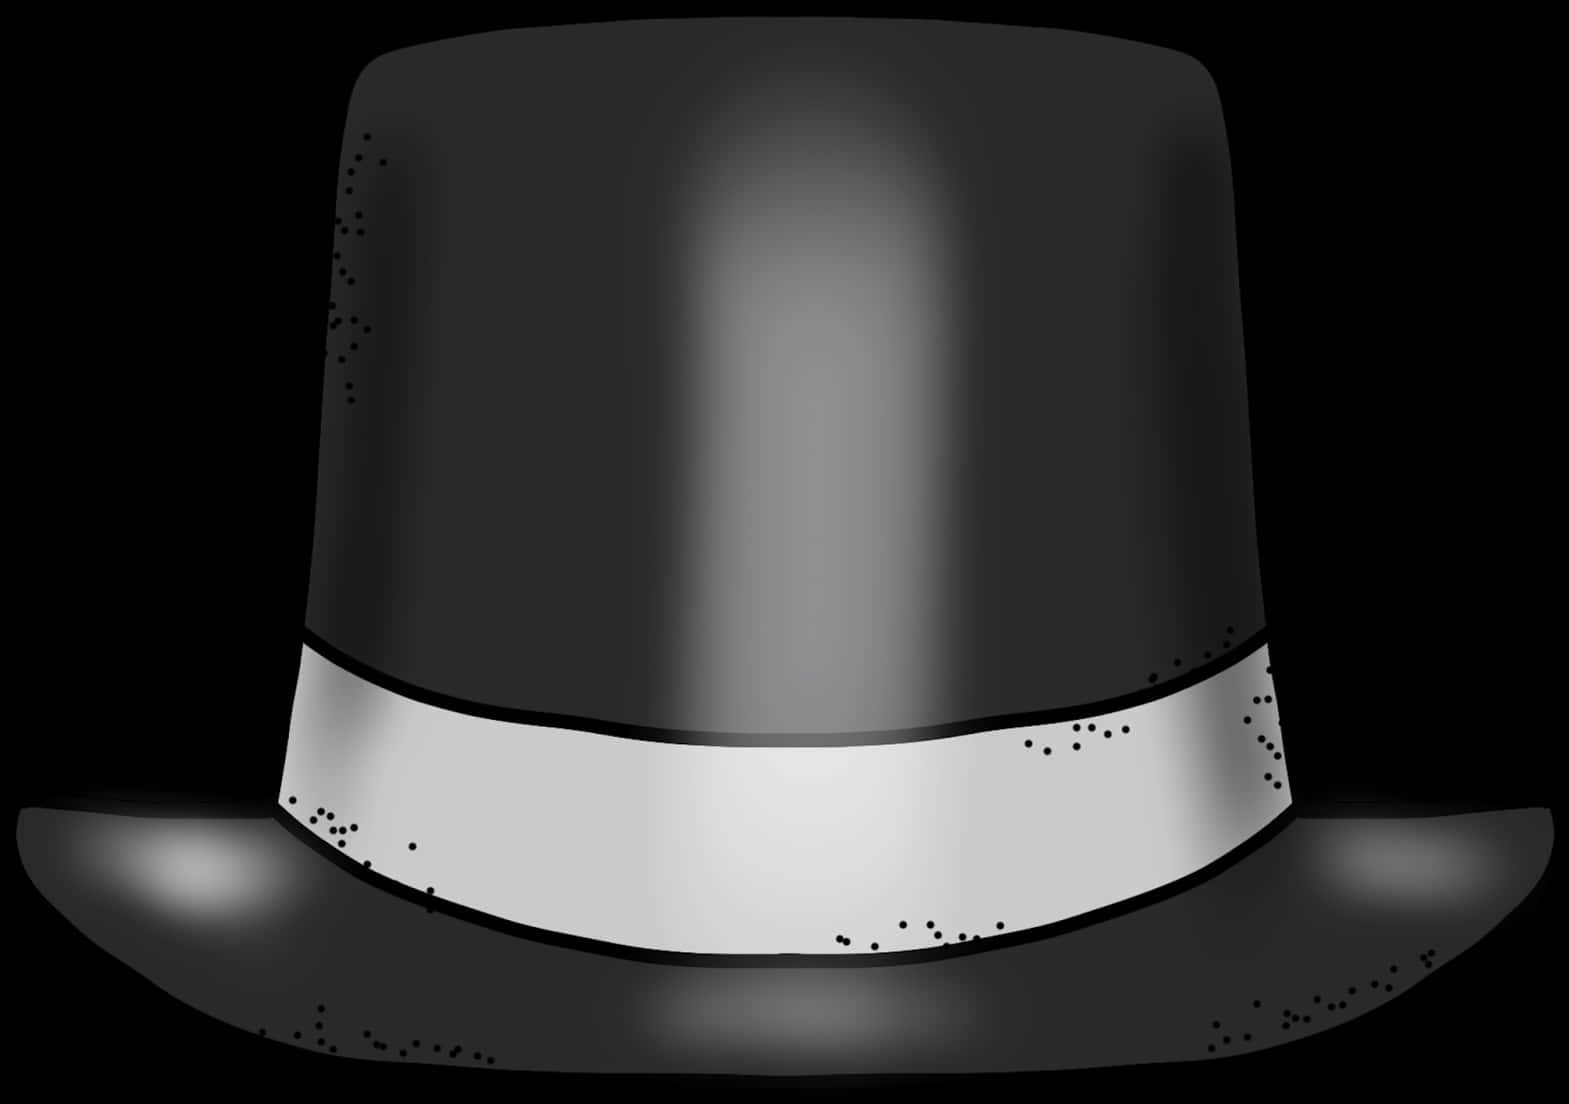 Classic Black Top Hat Illustration PNG image